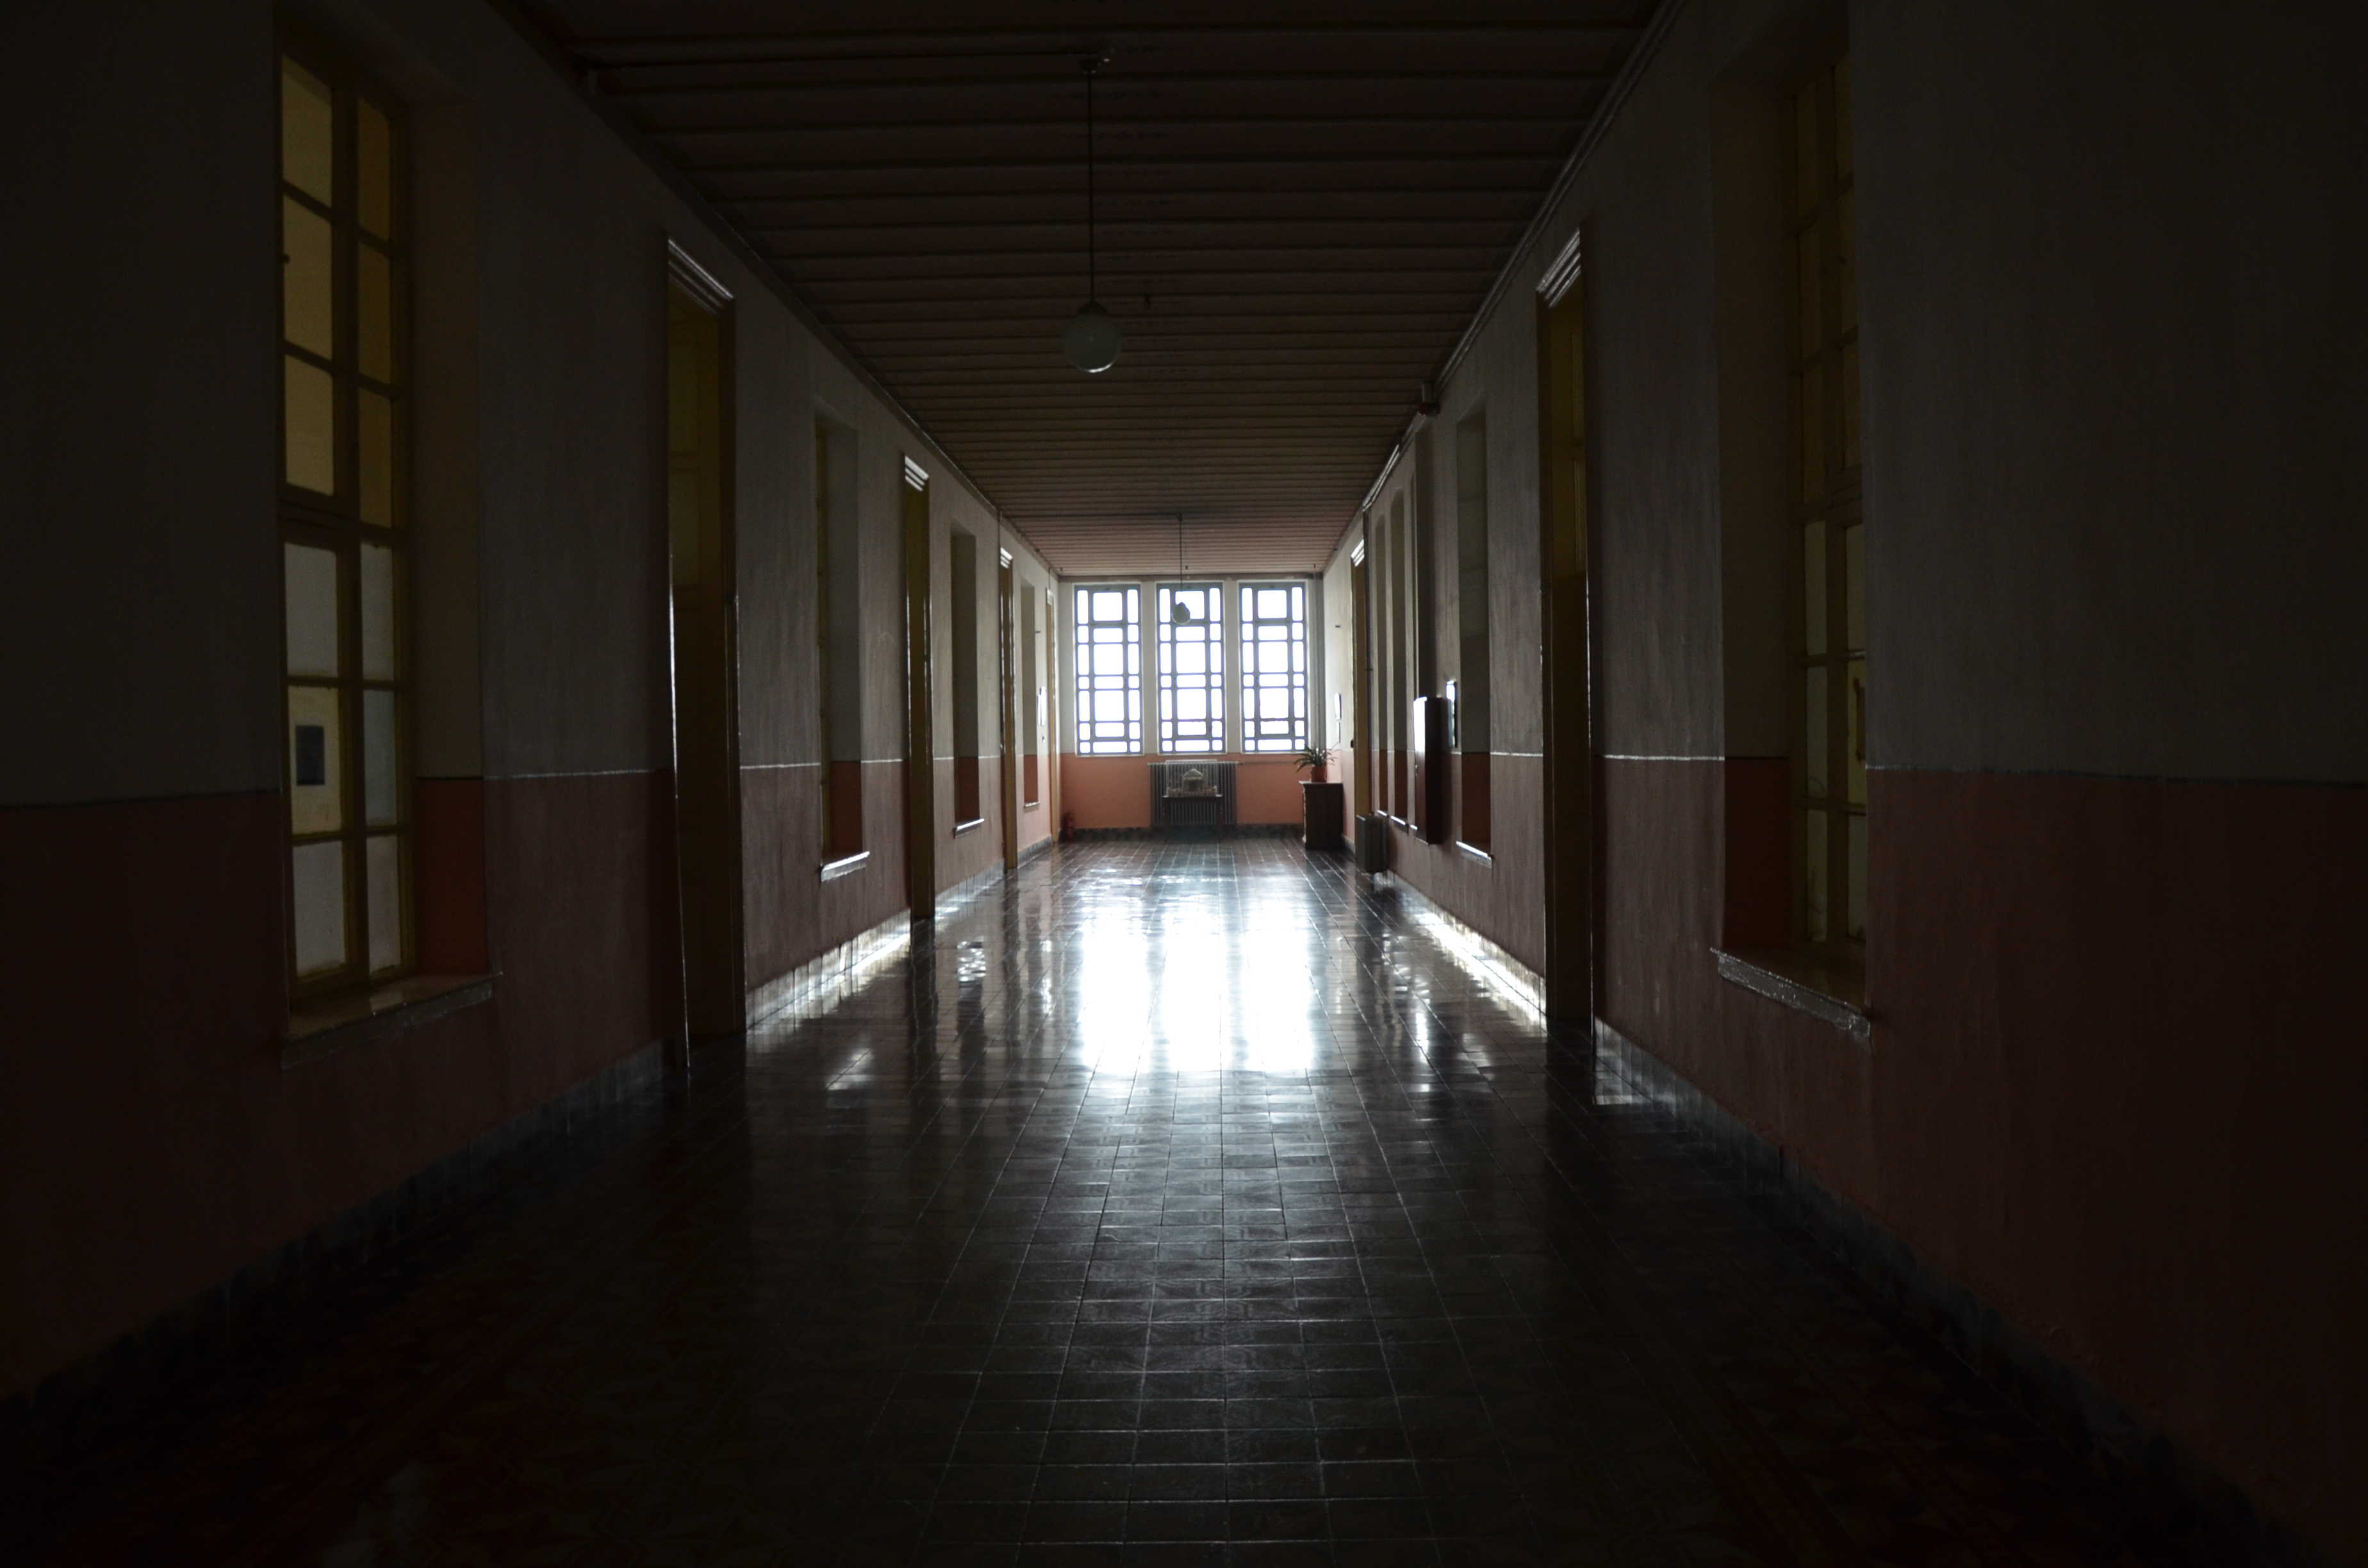 Hallway at Halki Seminary on Heybeliada, Princes' Islands, Istanbul, Turkey